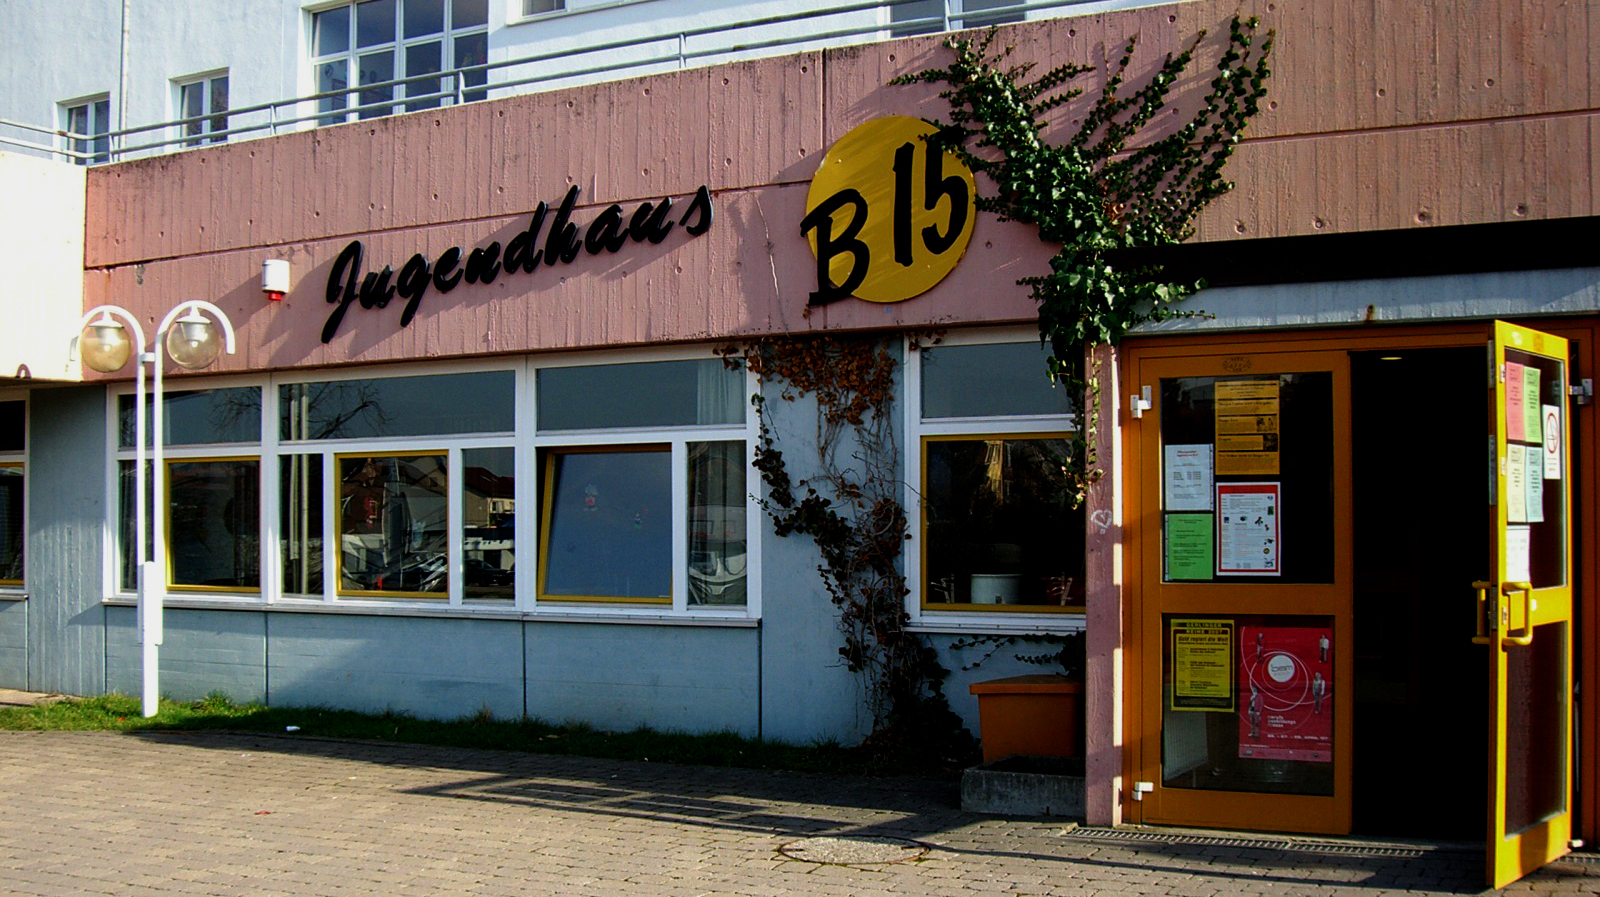 Jugendhaus B15 Gerlingen